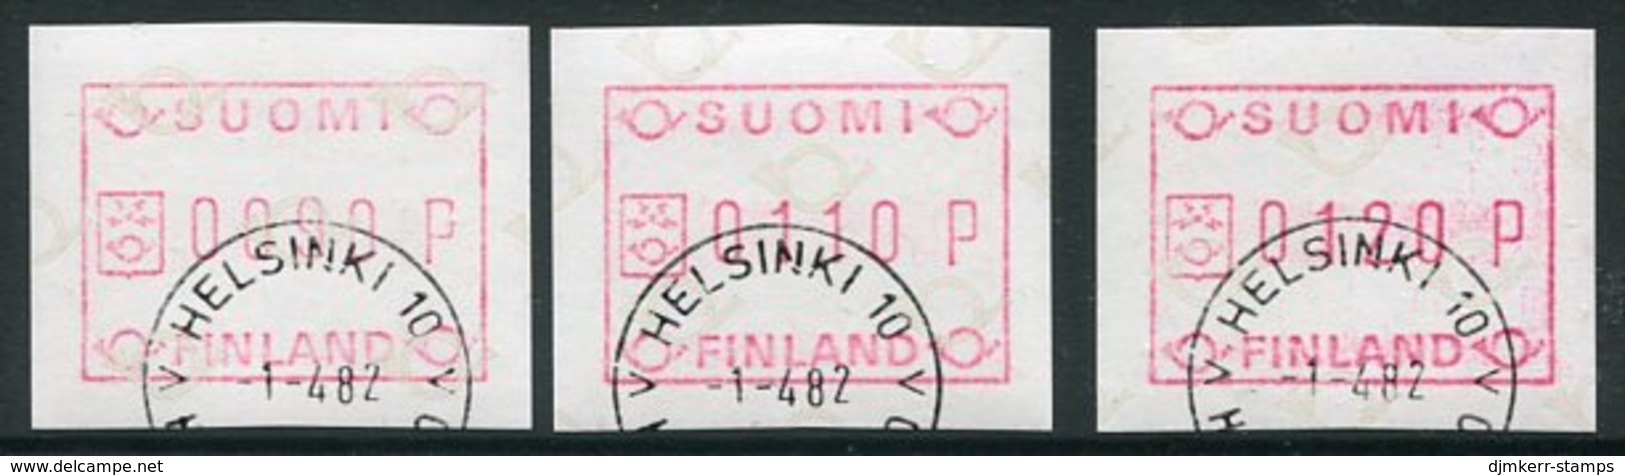 FINLAND 1982 Definitive  ATM, Three Values Used..  Michel 1 - Vignette [ATM]